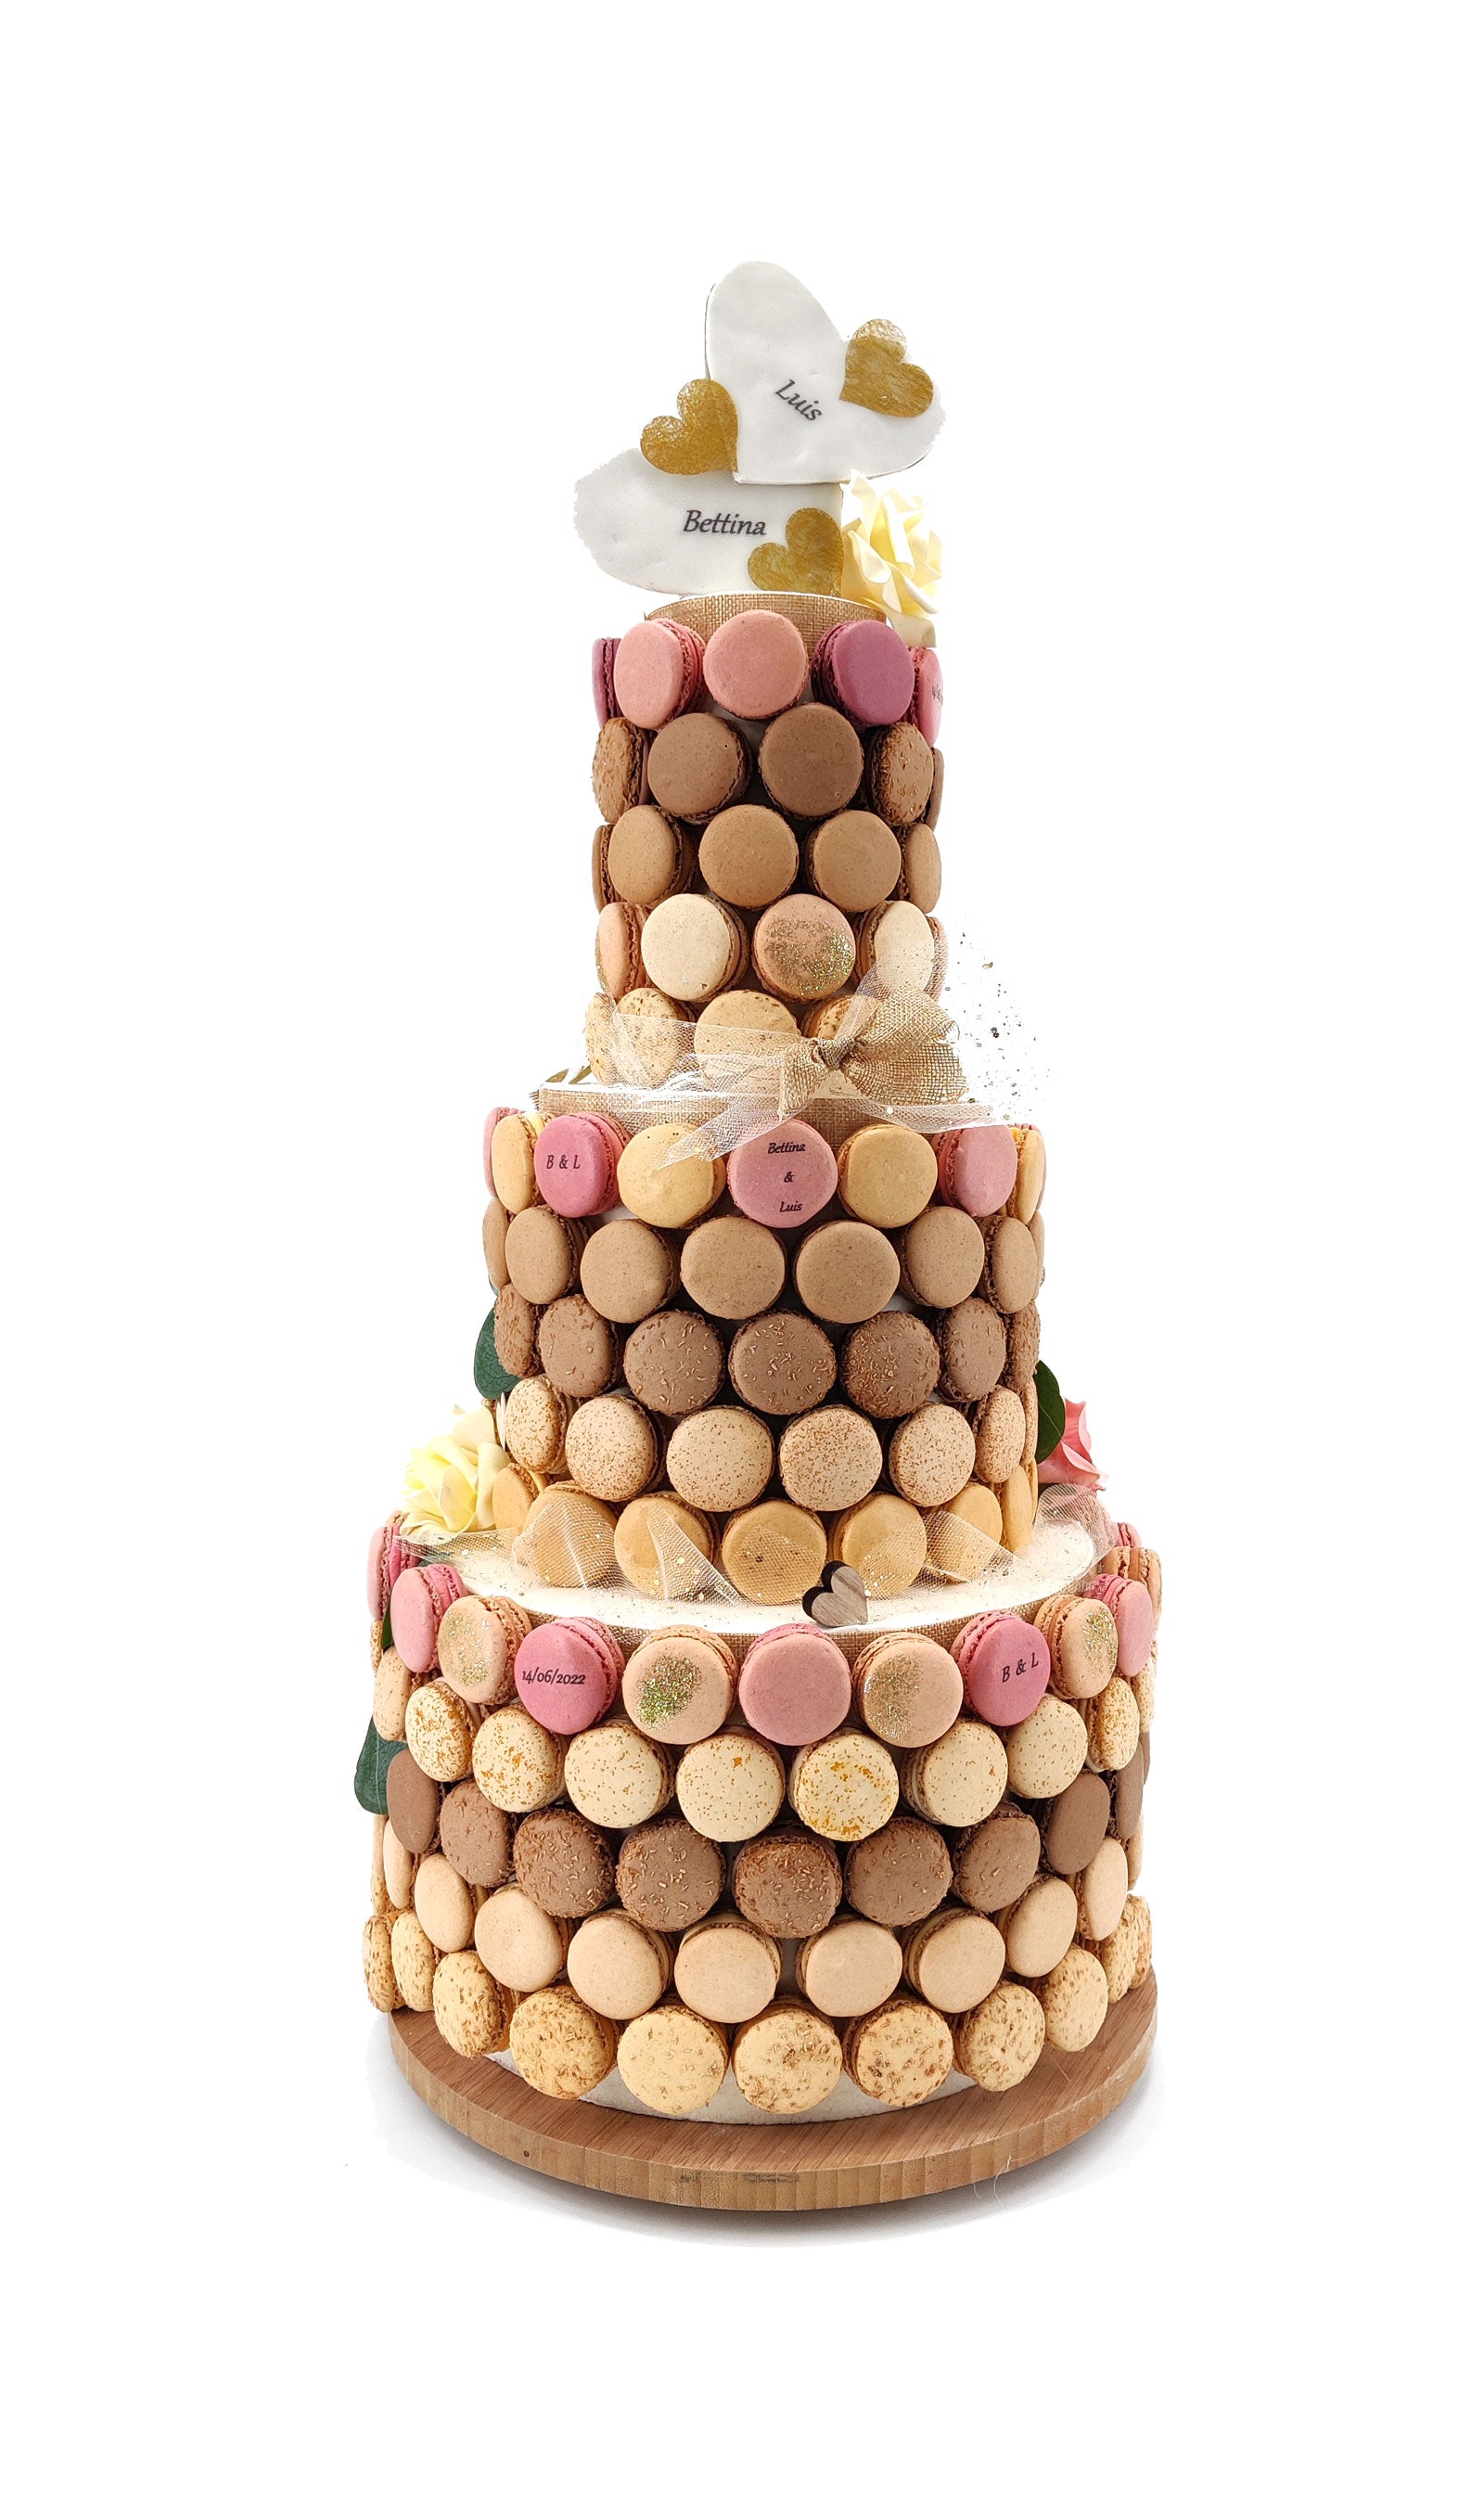 Tambour cake - 60 macarons minimum